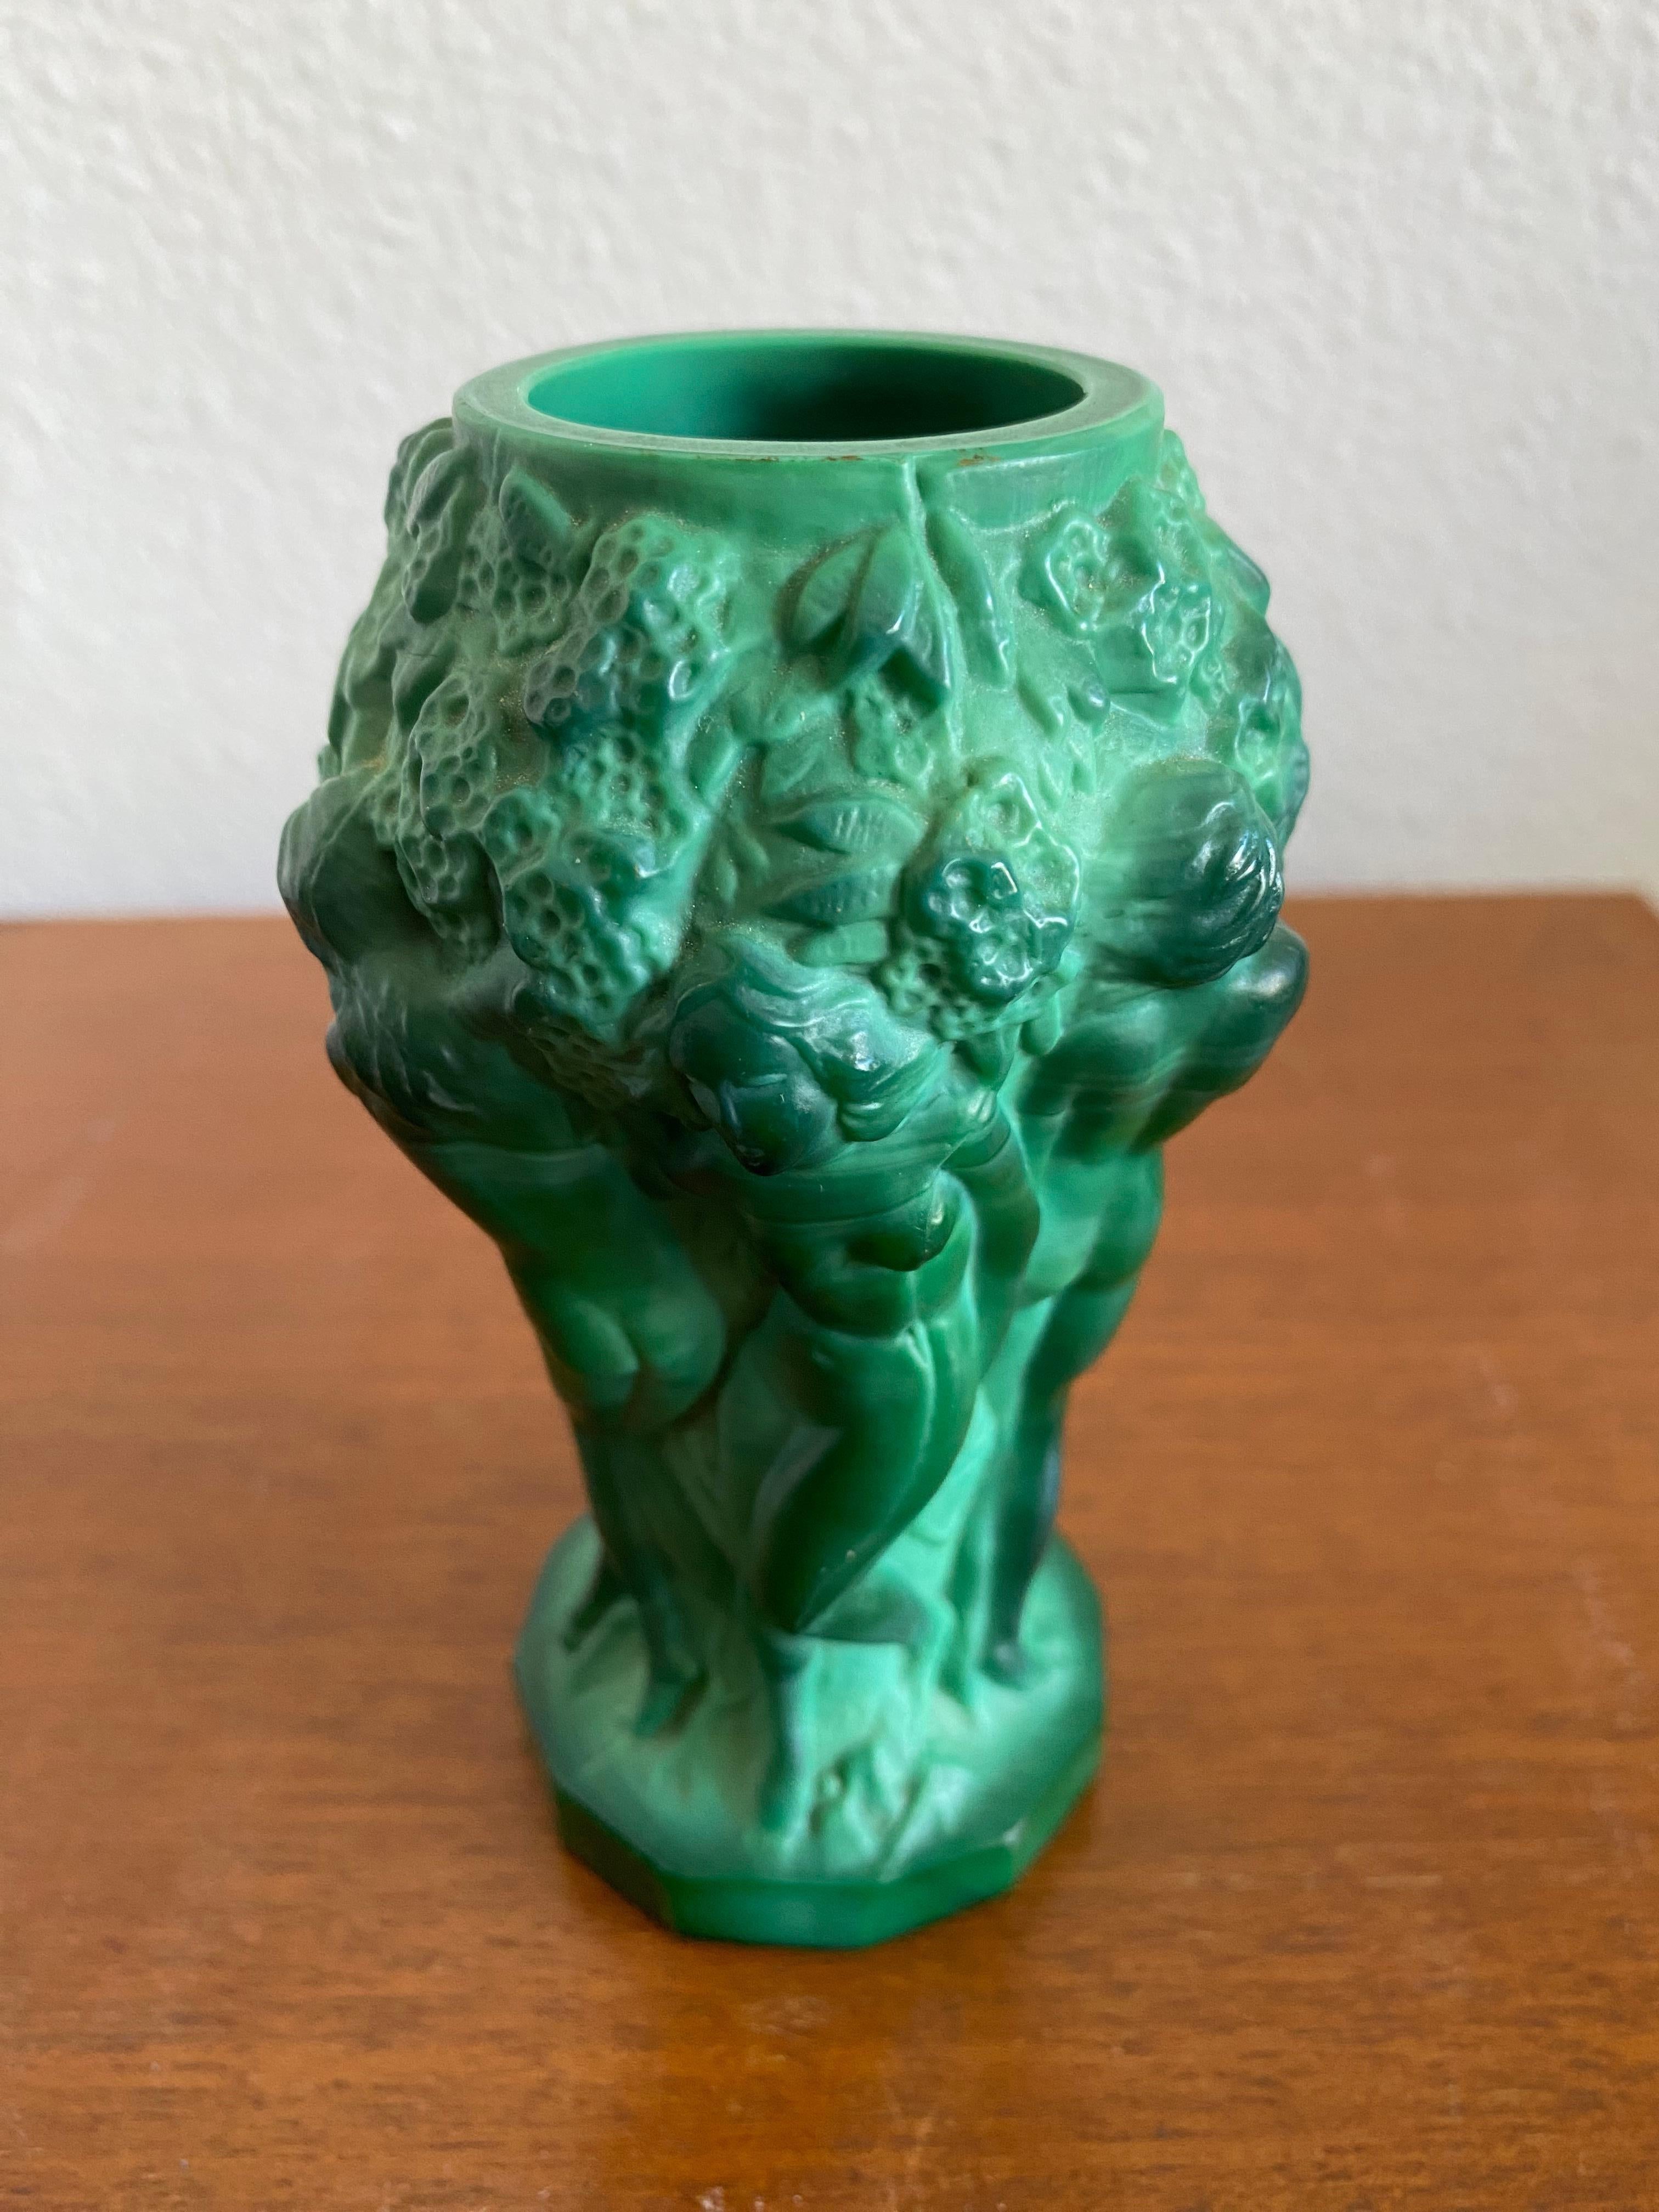 Lovely Art Deco small vase designed by Curt Schlevogt. Vibrant color.